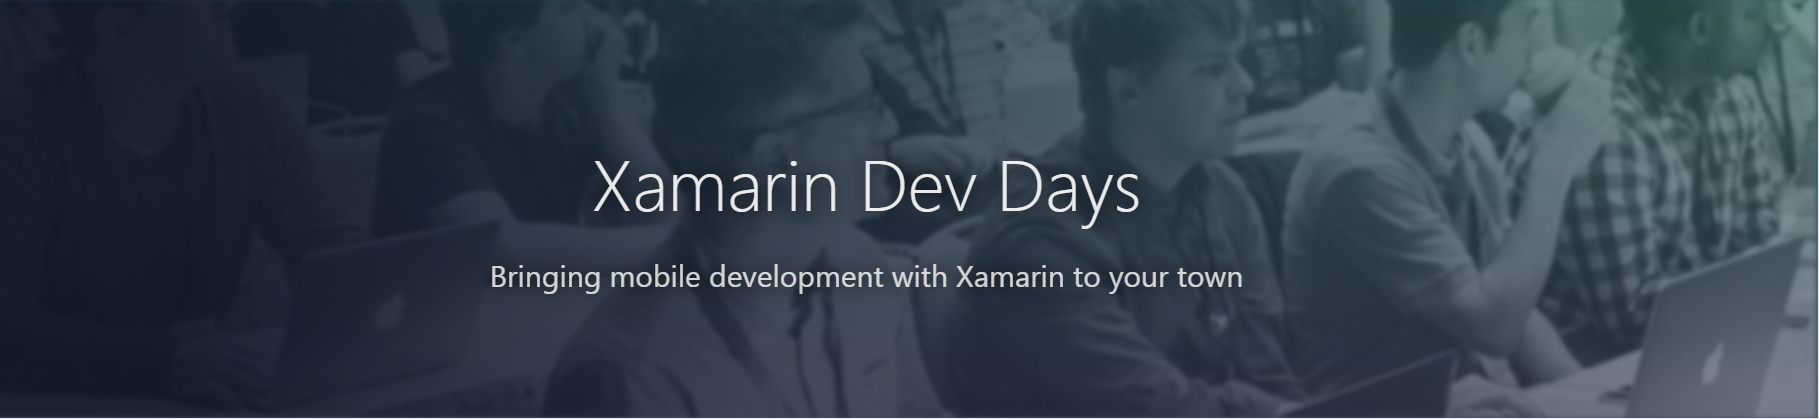 Xamarin Dev Day Backdrop Image